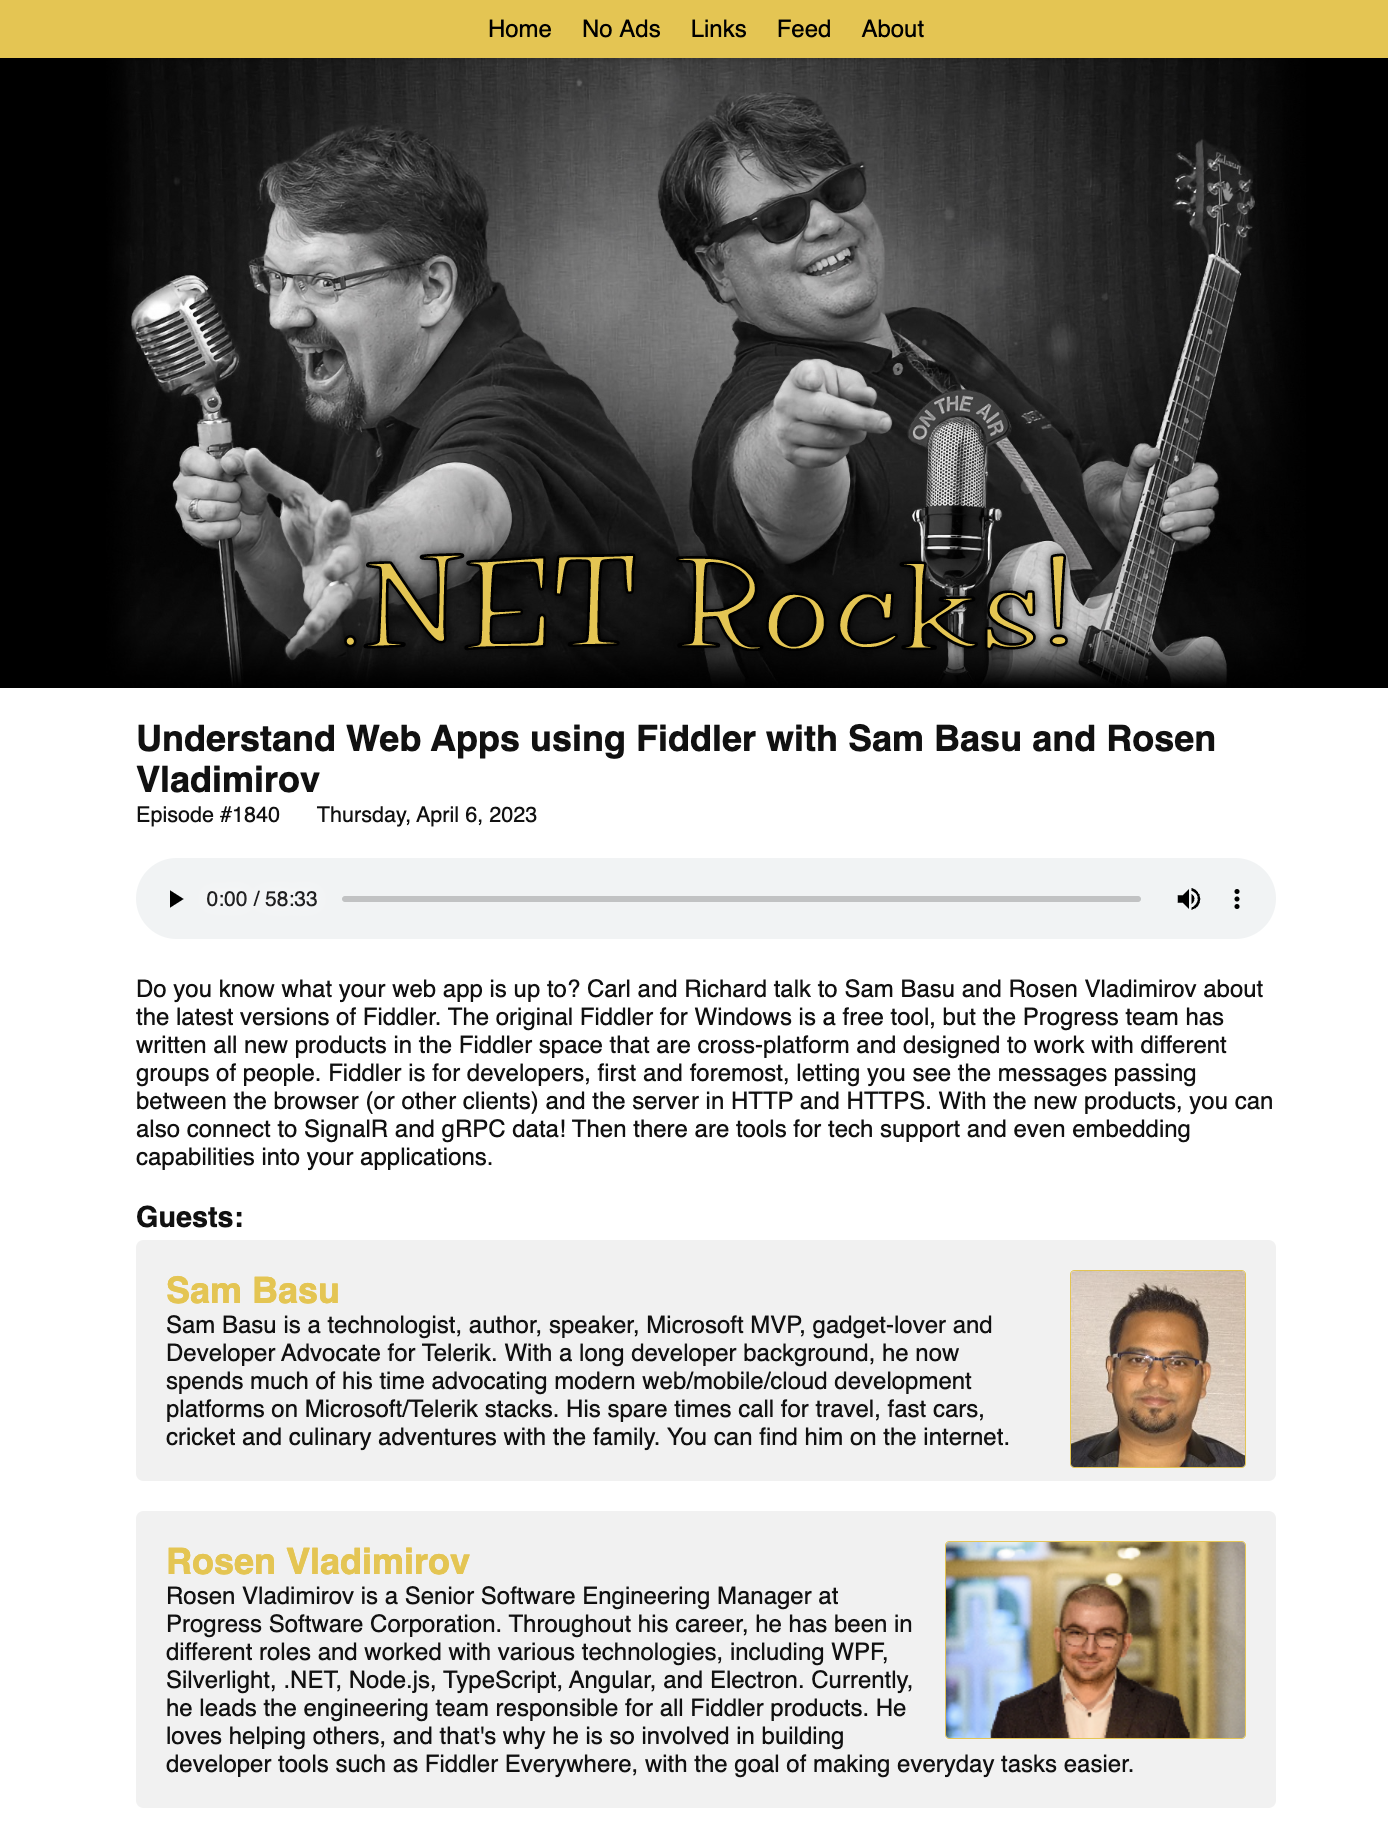 Screenshot of .NET Rocks episode with Rosen Vladimirov and Sam Basu